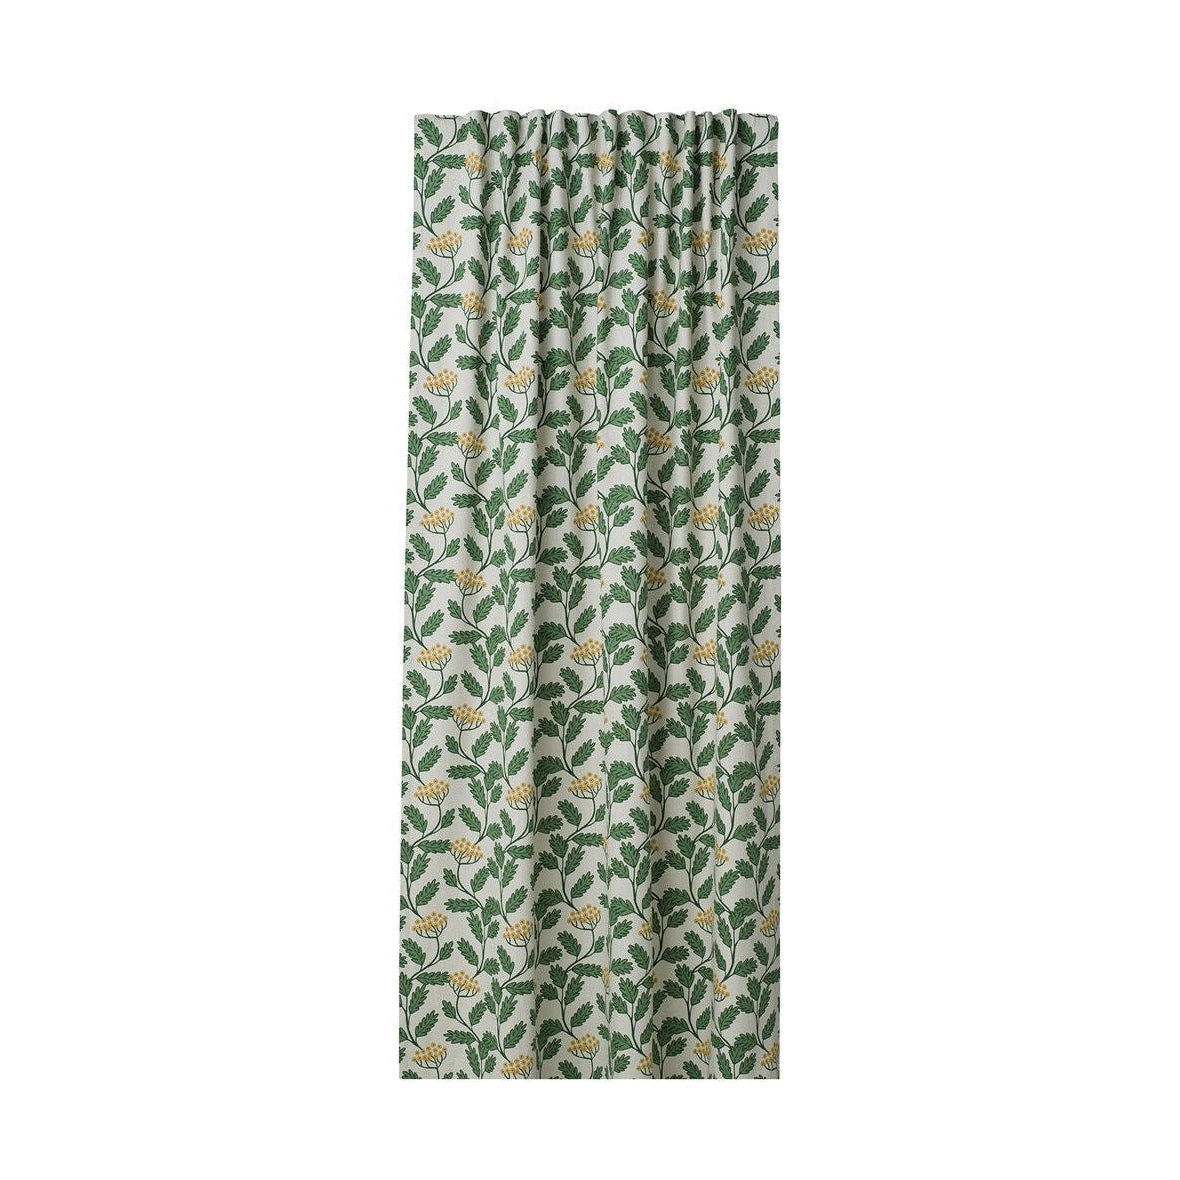 Spira Renfana Curtain With Multiband, Green